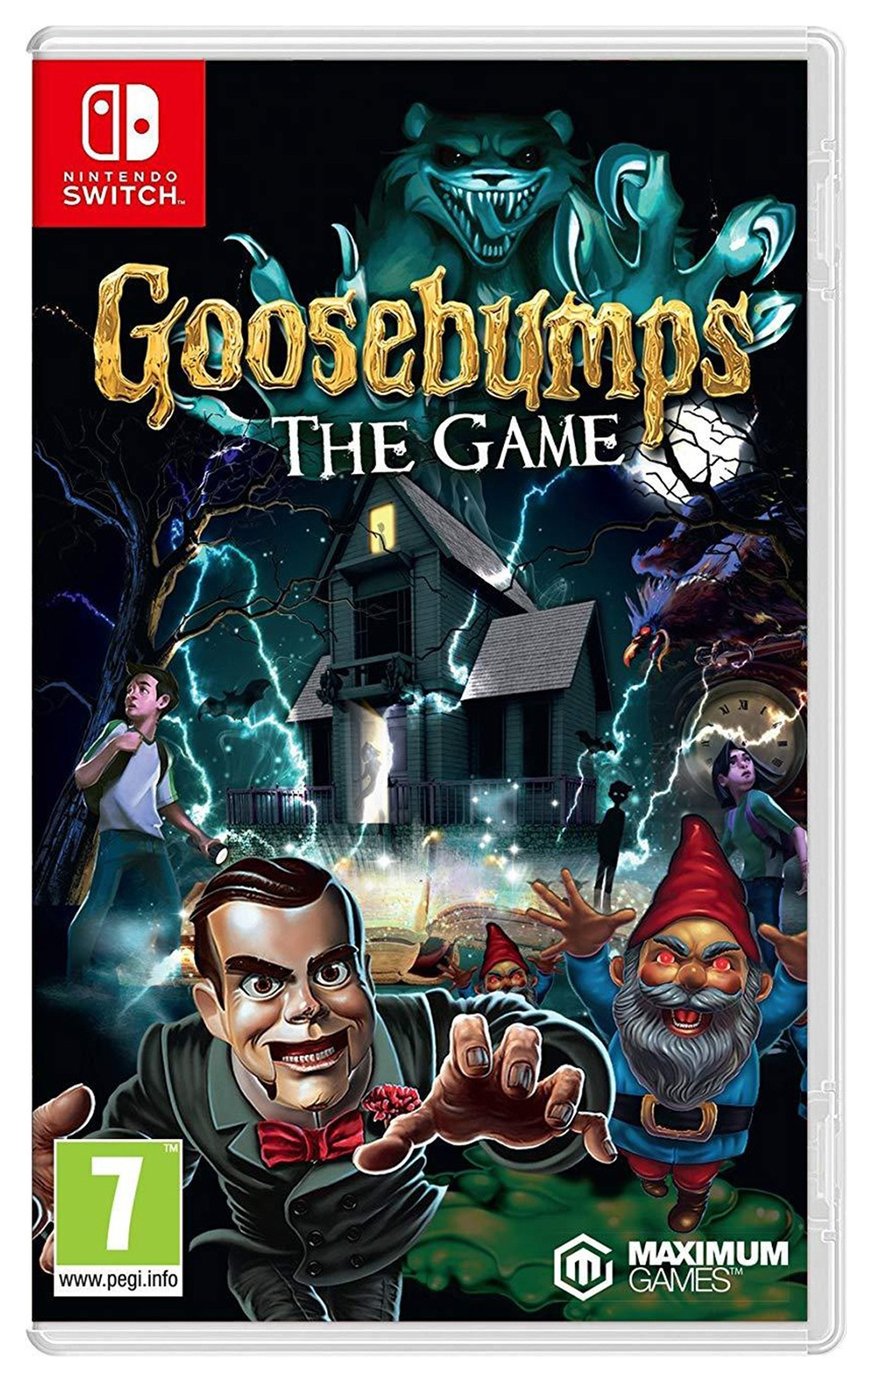 Goosebumps: The Game Nintendo Switch Game